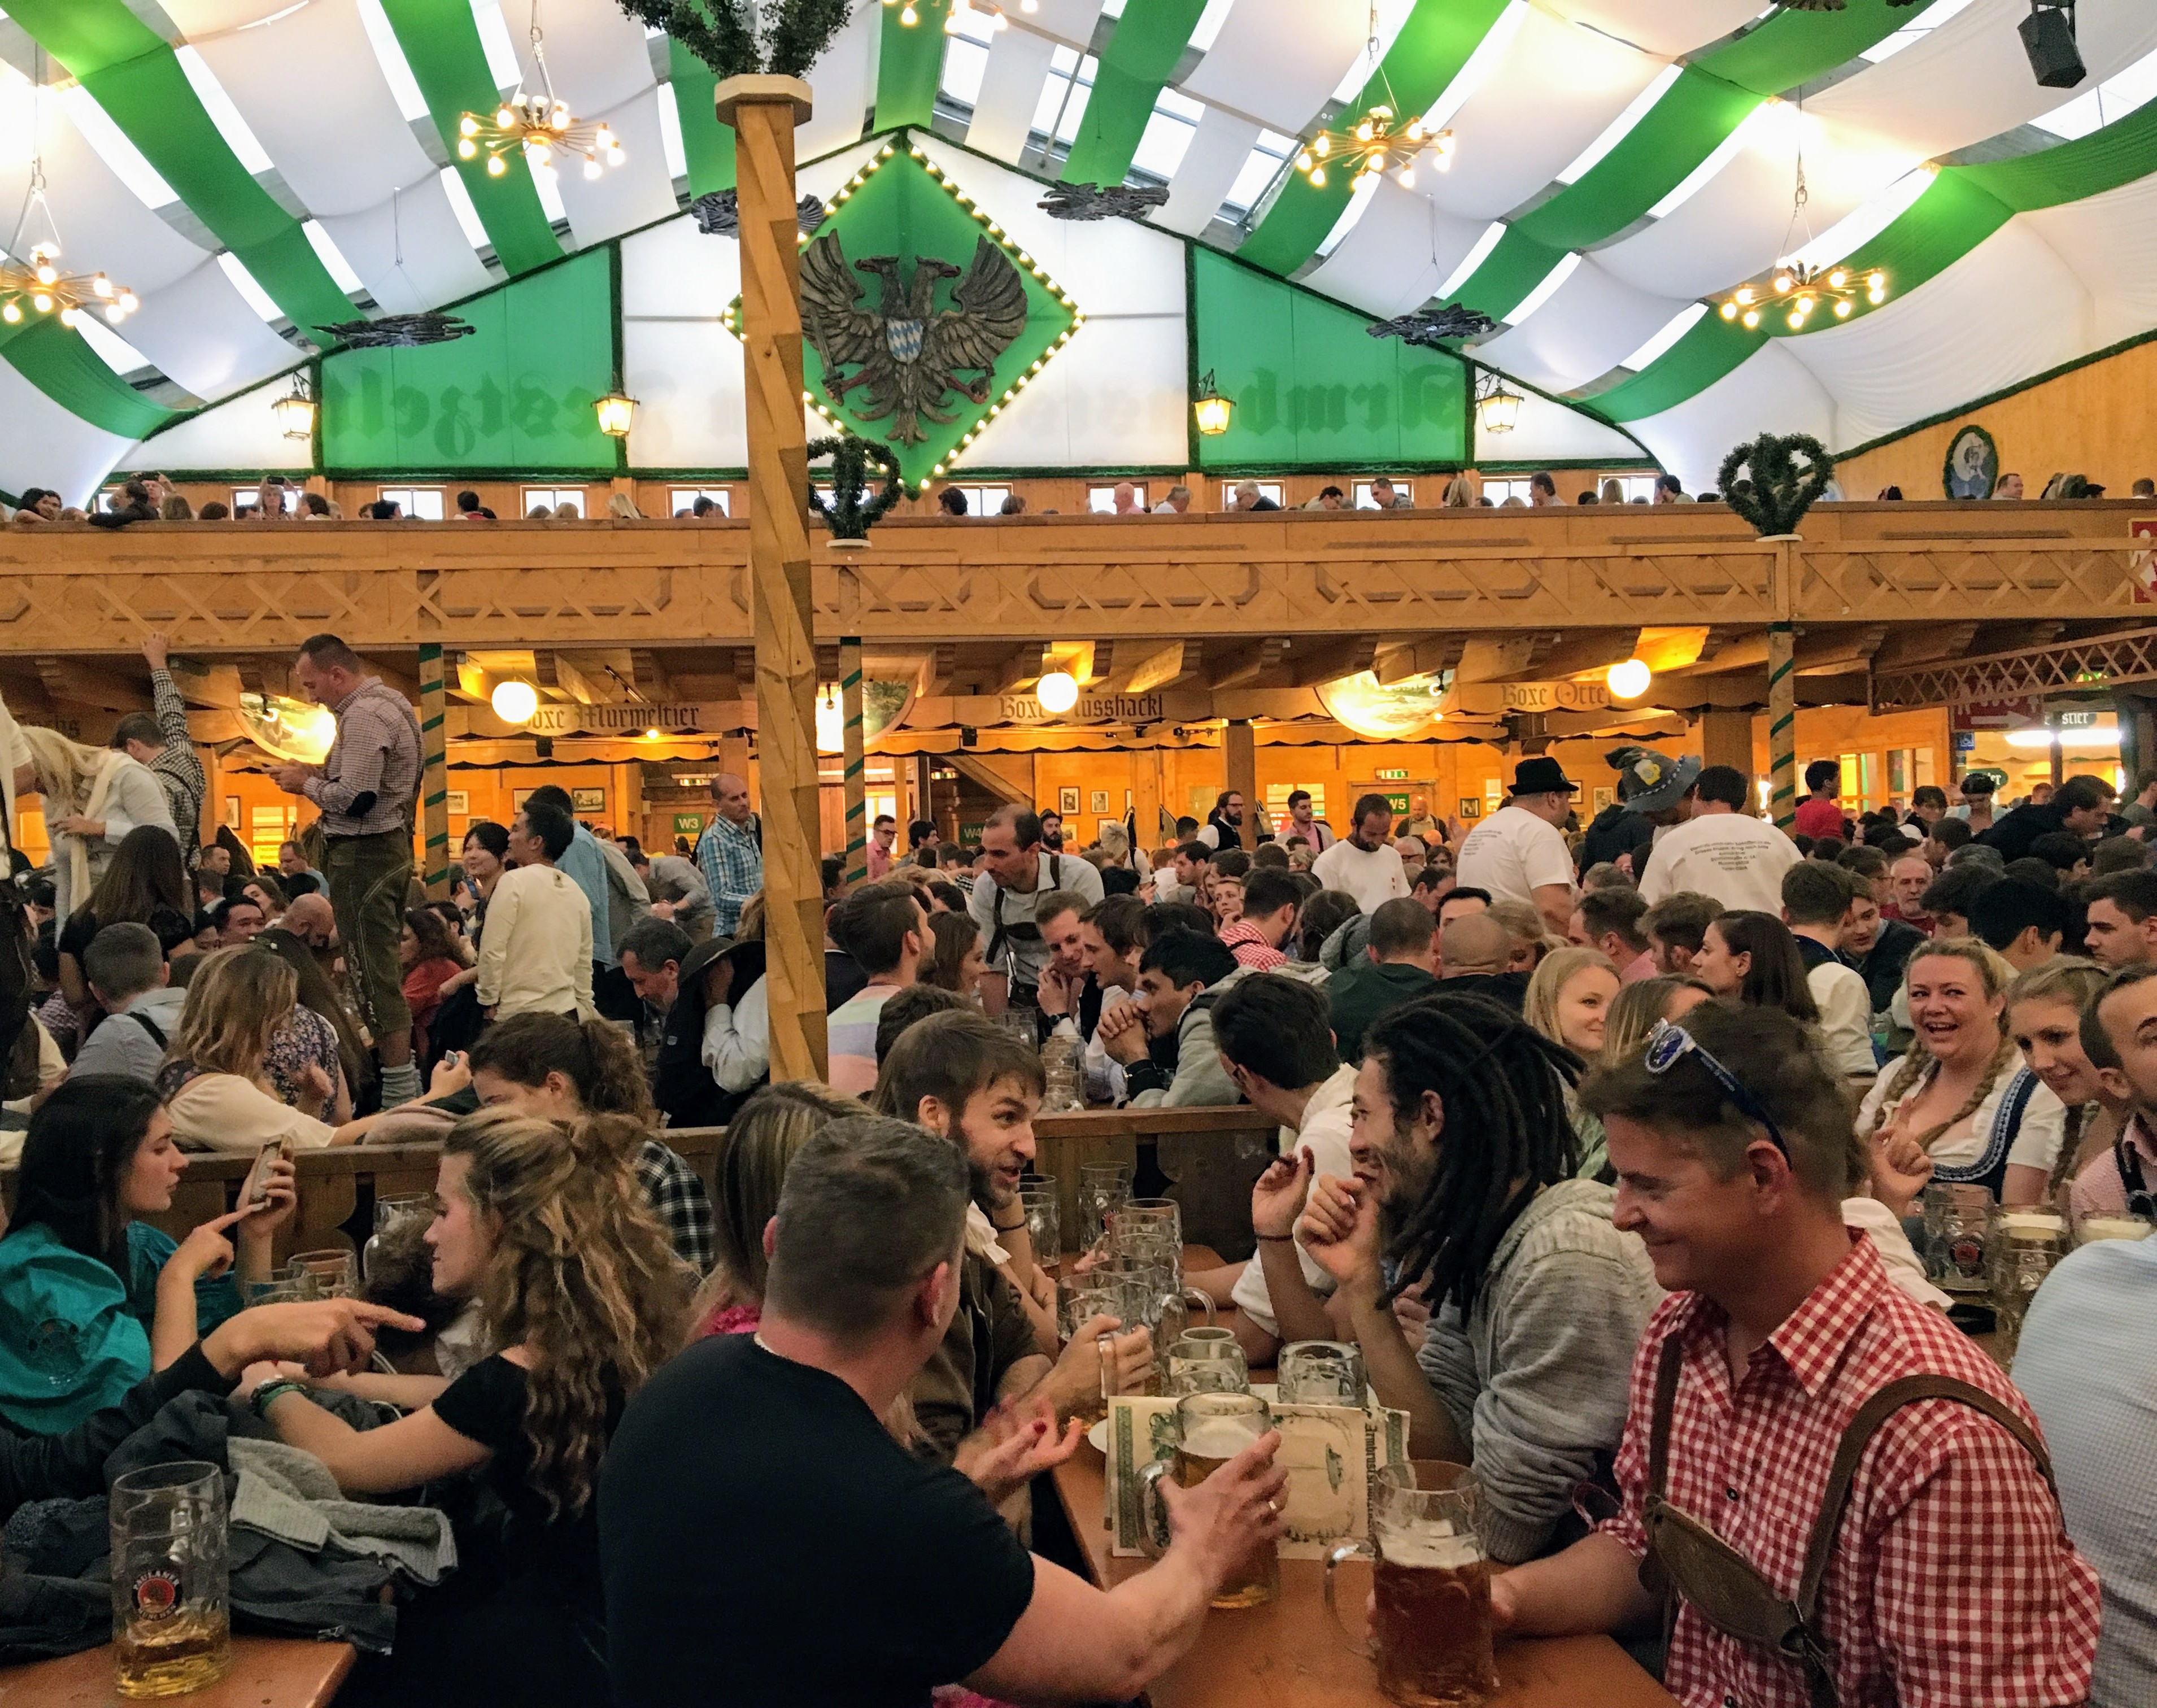 Inside a beer tent at Oktoberfest in Munich, Germany